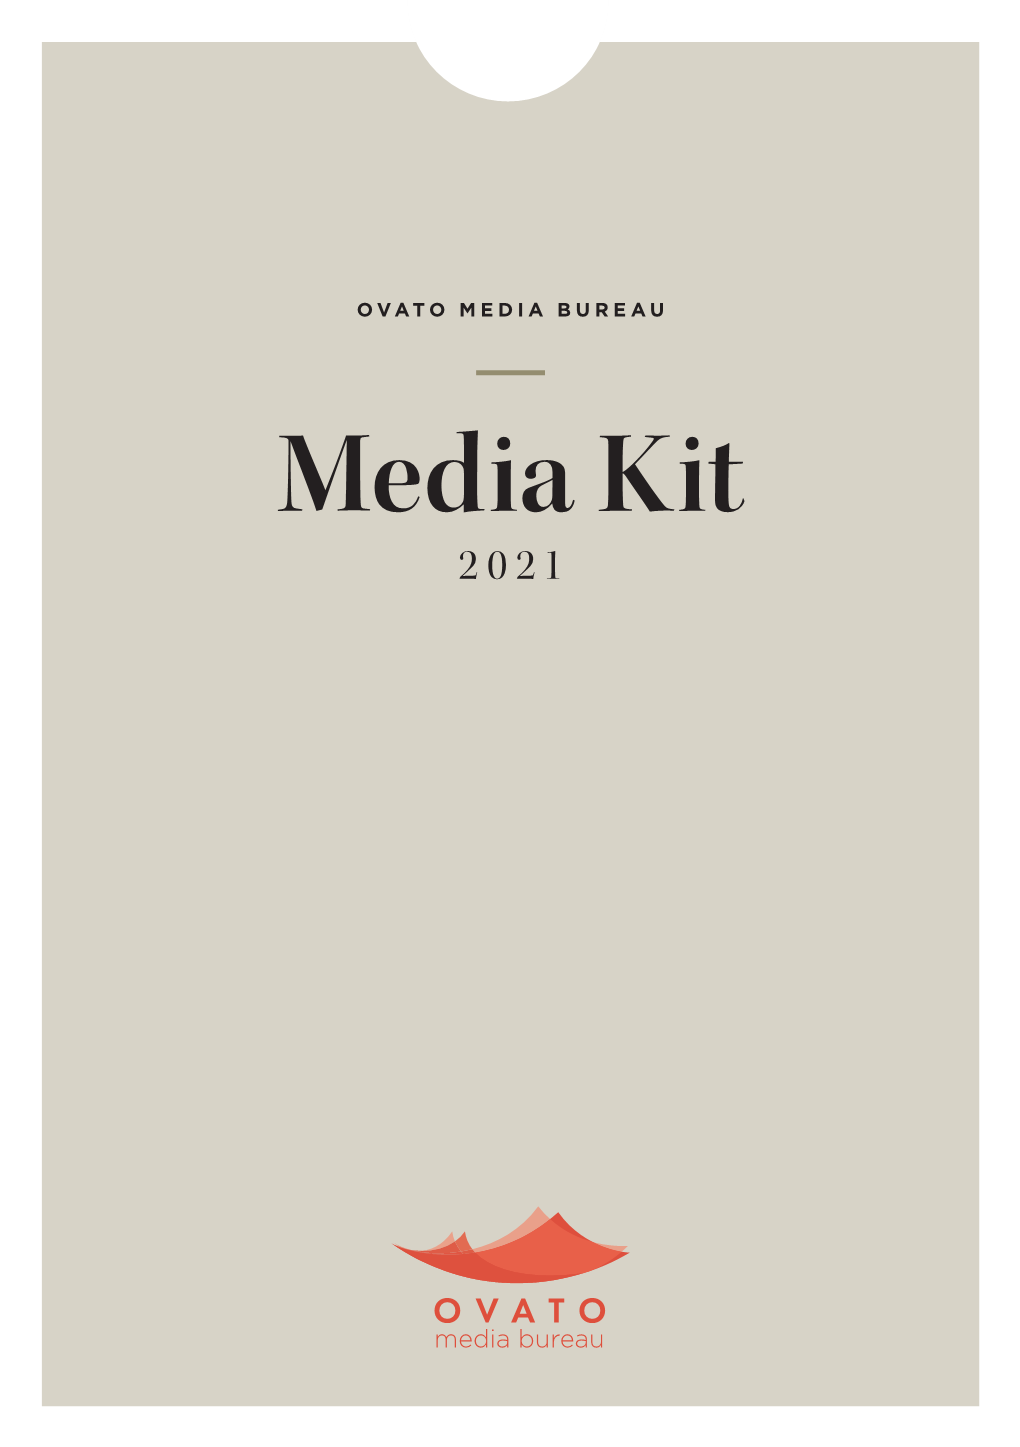 OVATO MEDIA BUREAU Media Kit 2021